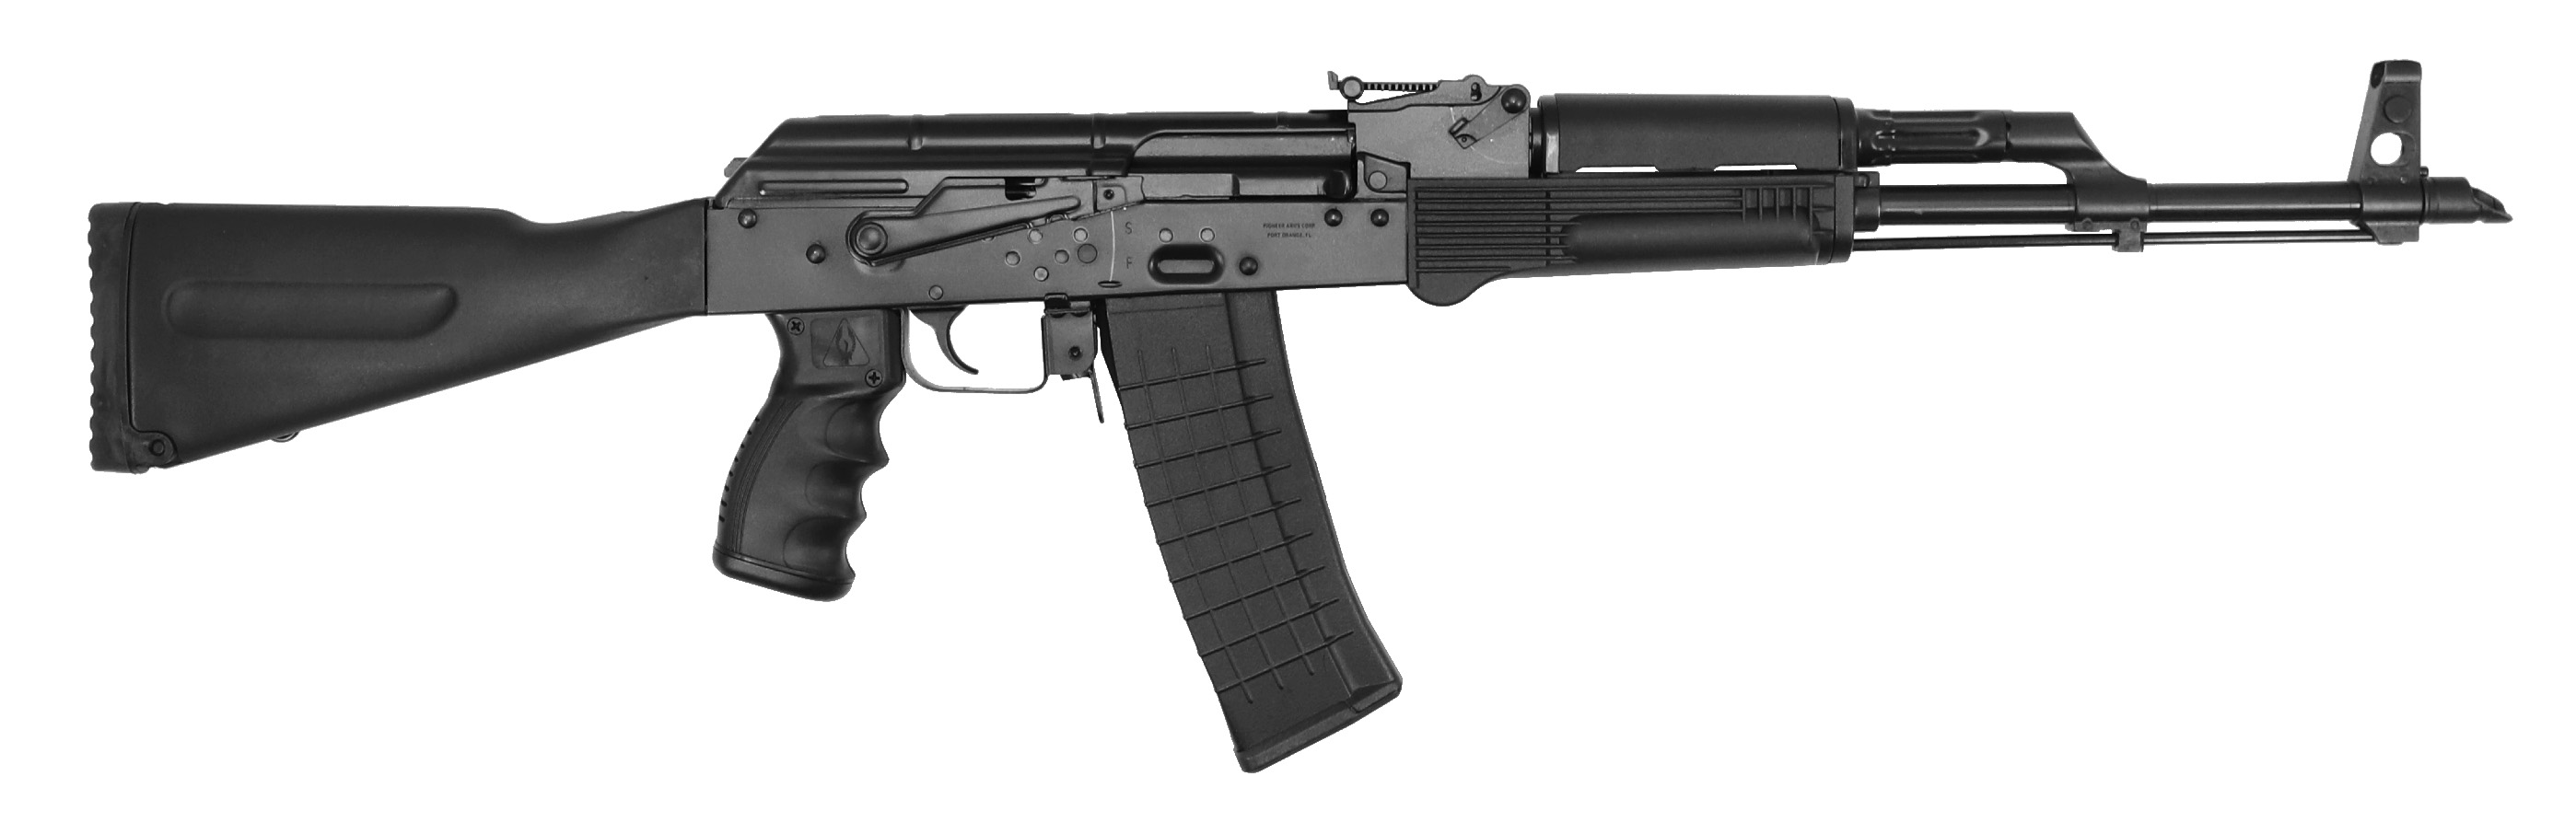 PIONEER AK-47 FORGED 5.56 16